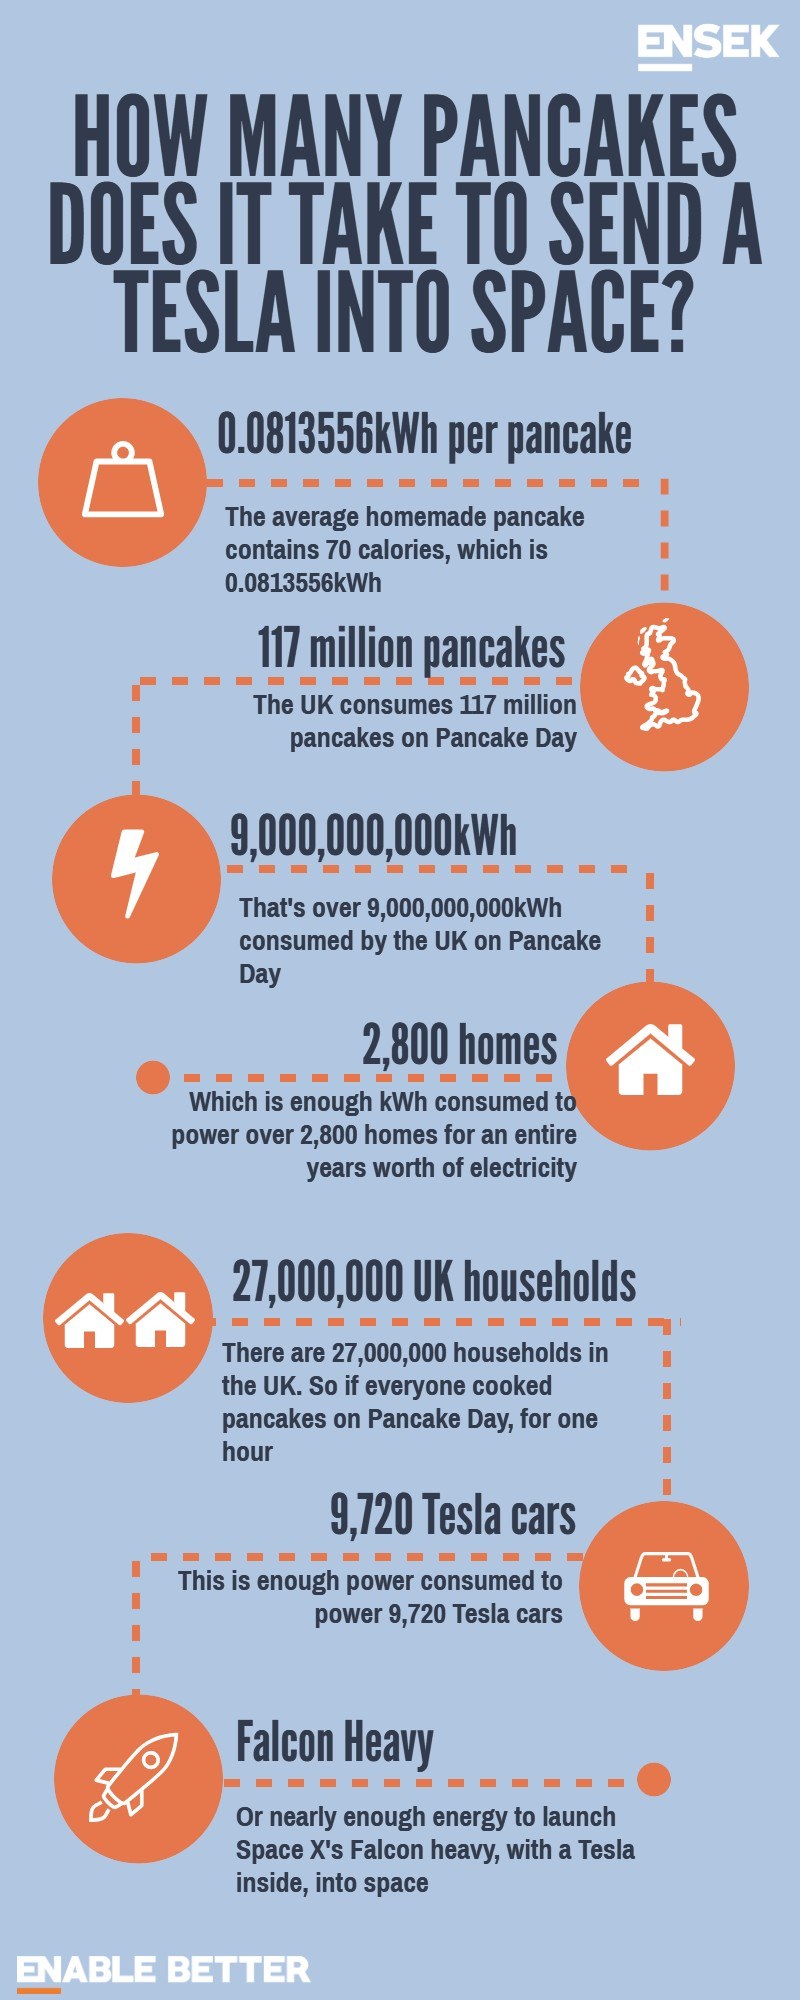 Pancakes and Tesla